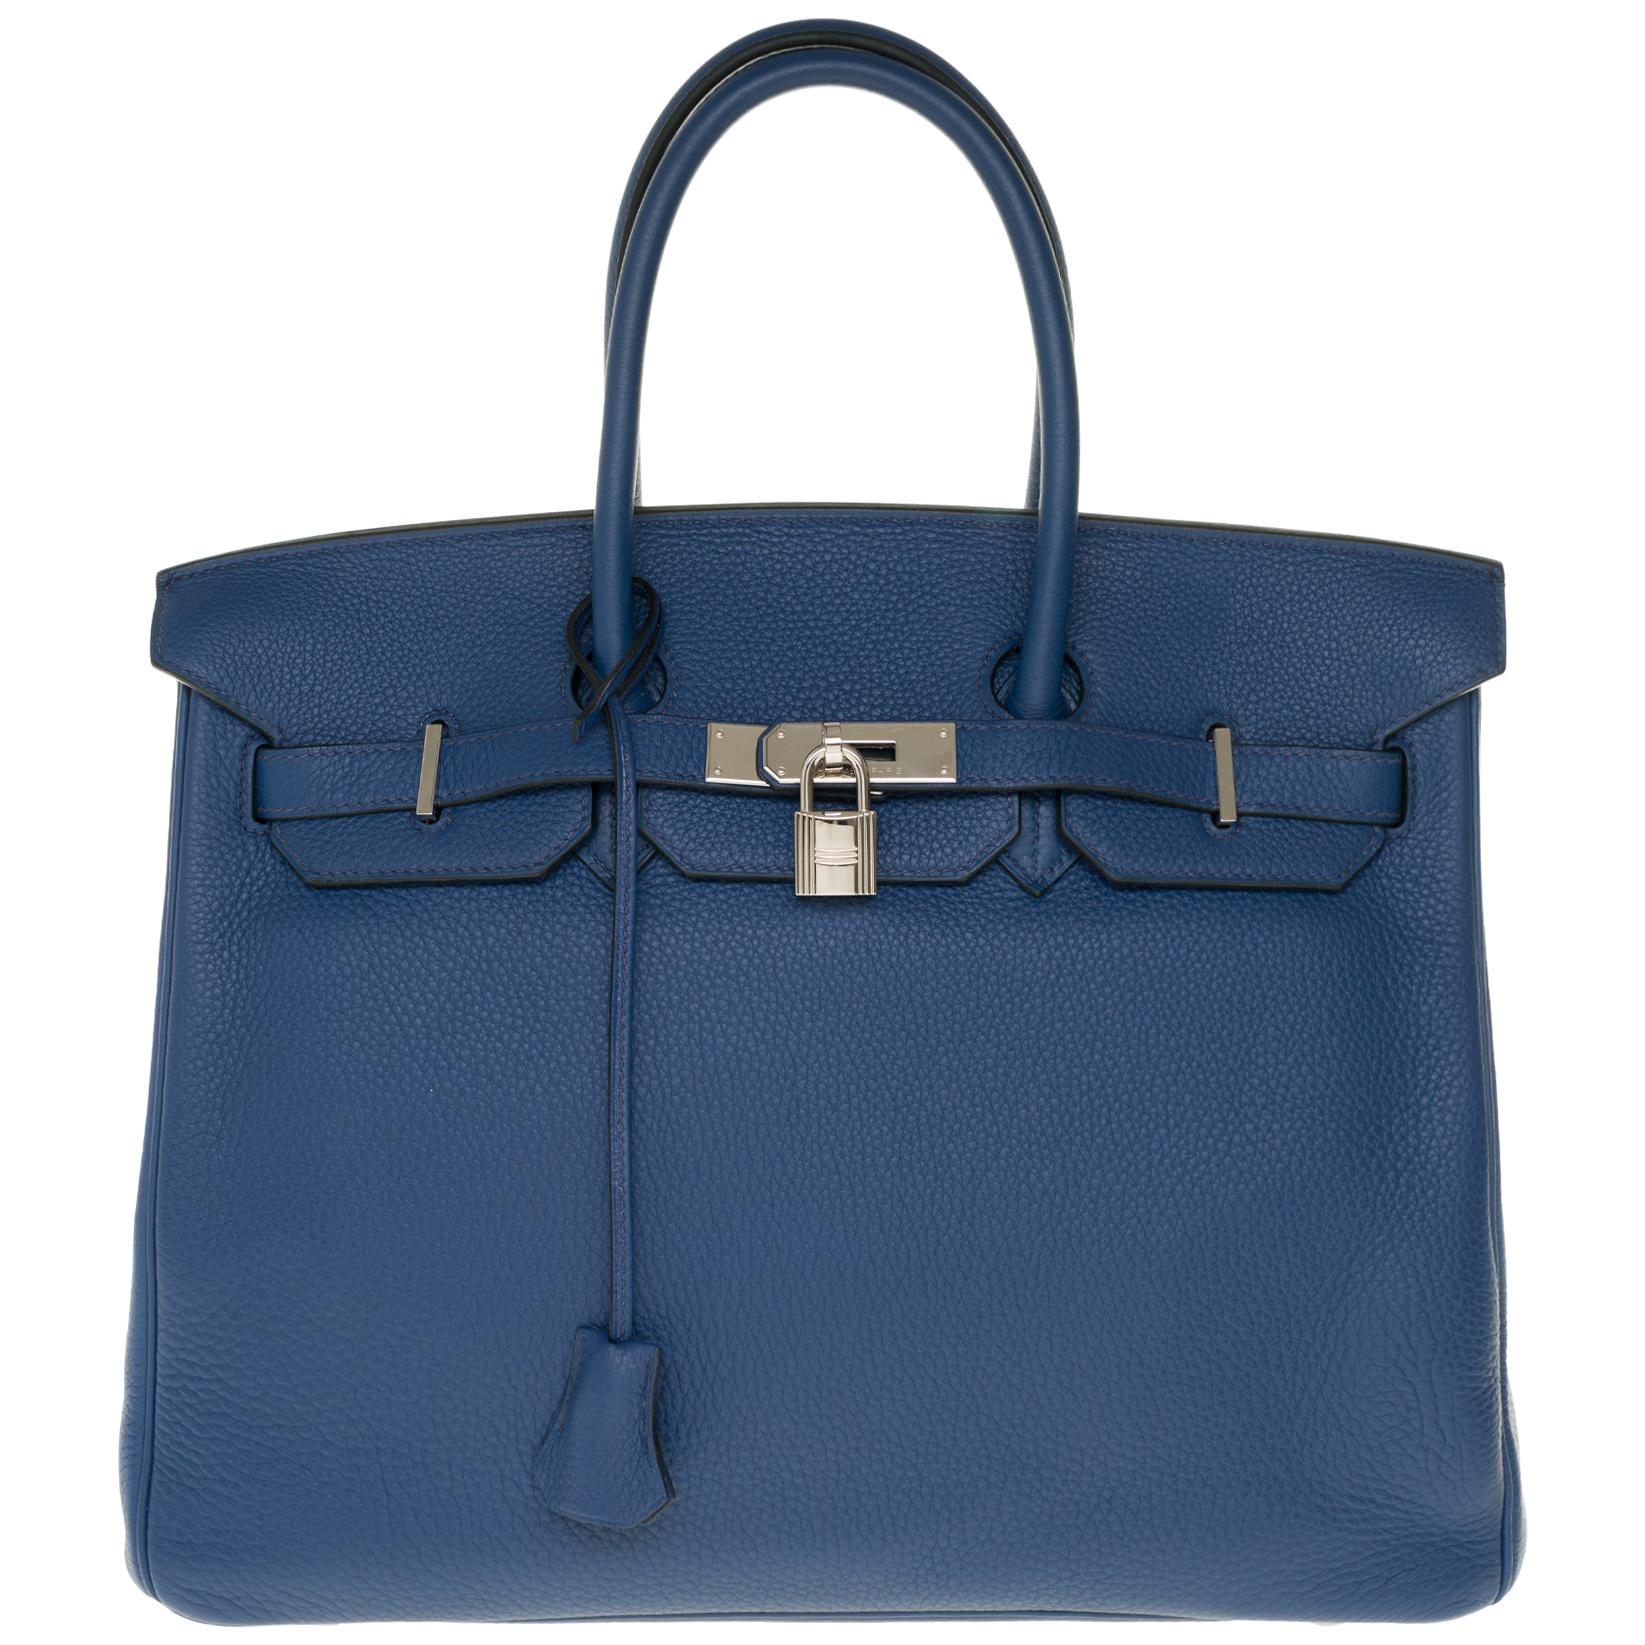 Hermès Birkin 35 handbag in Togo leather with Silver hardware !